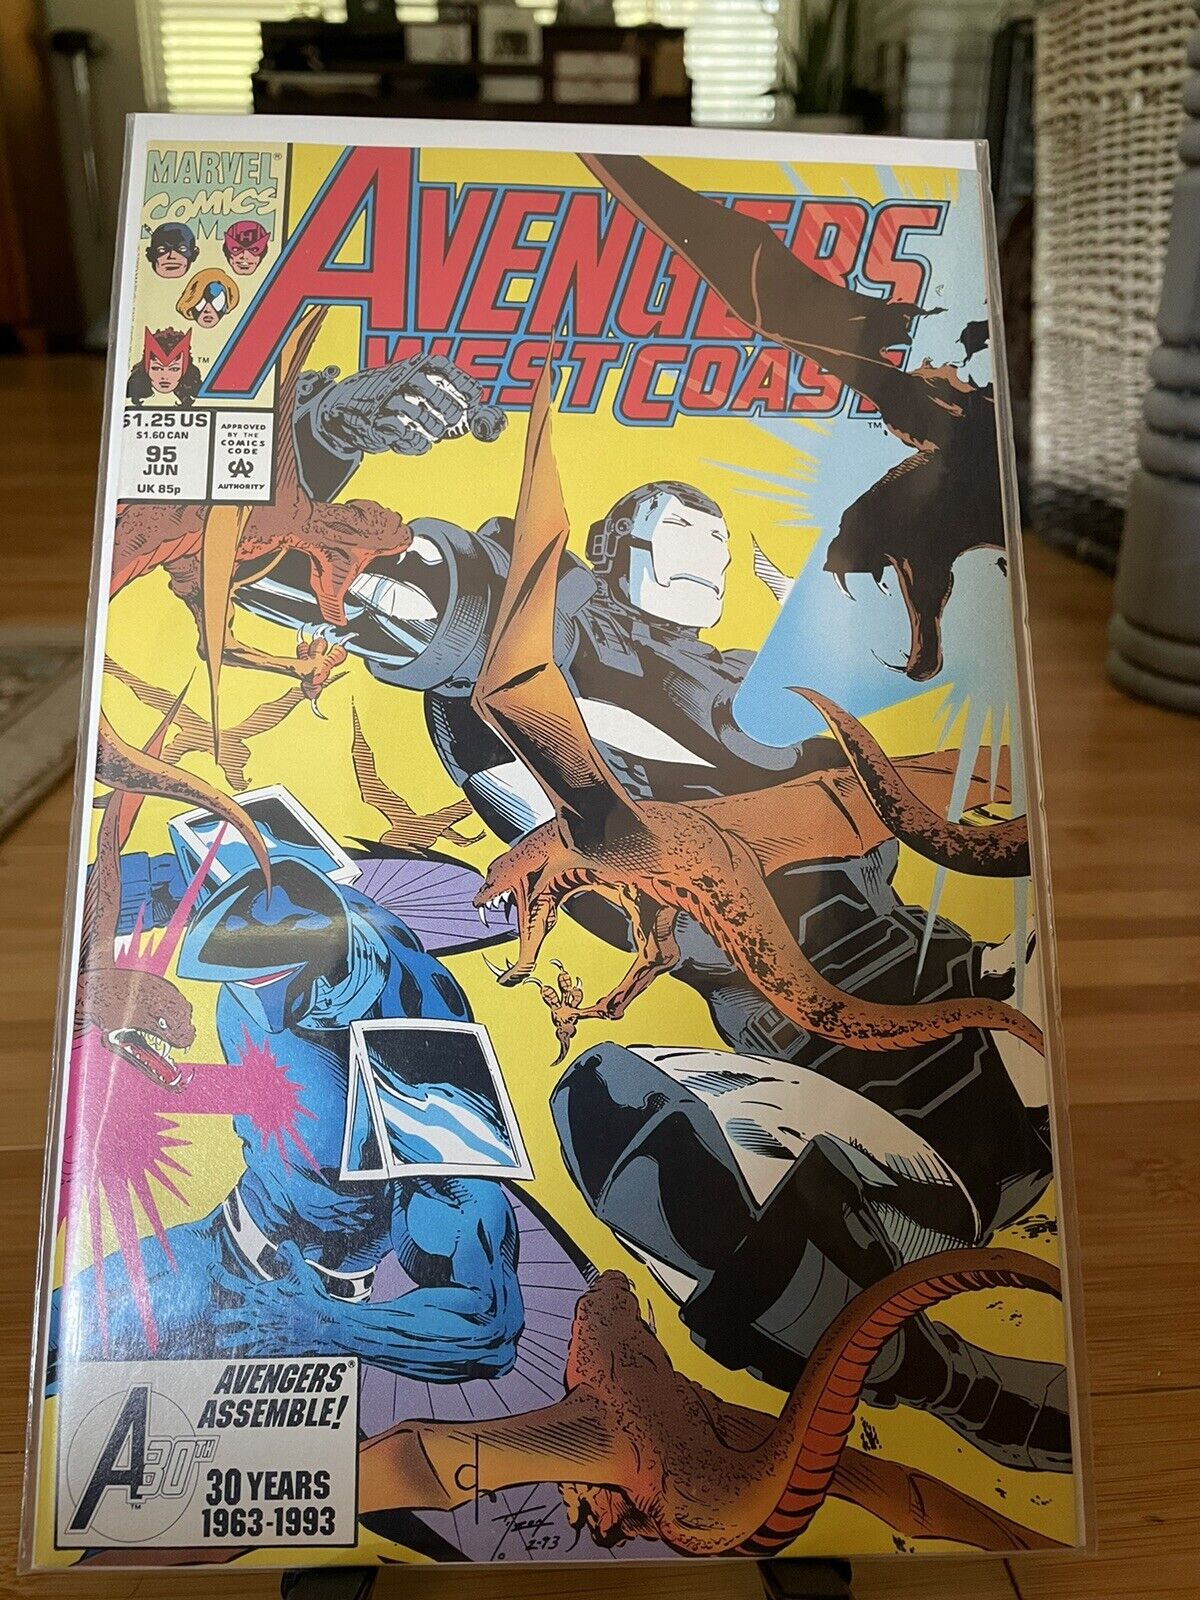 Avengers West Coast #95 / War Machine #6